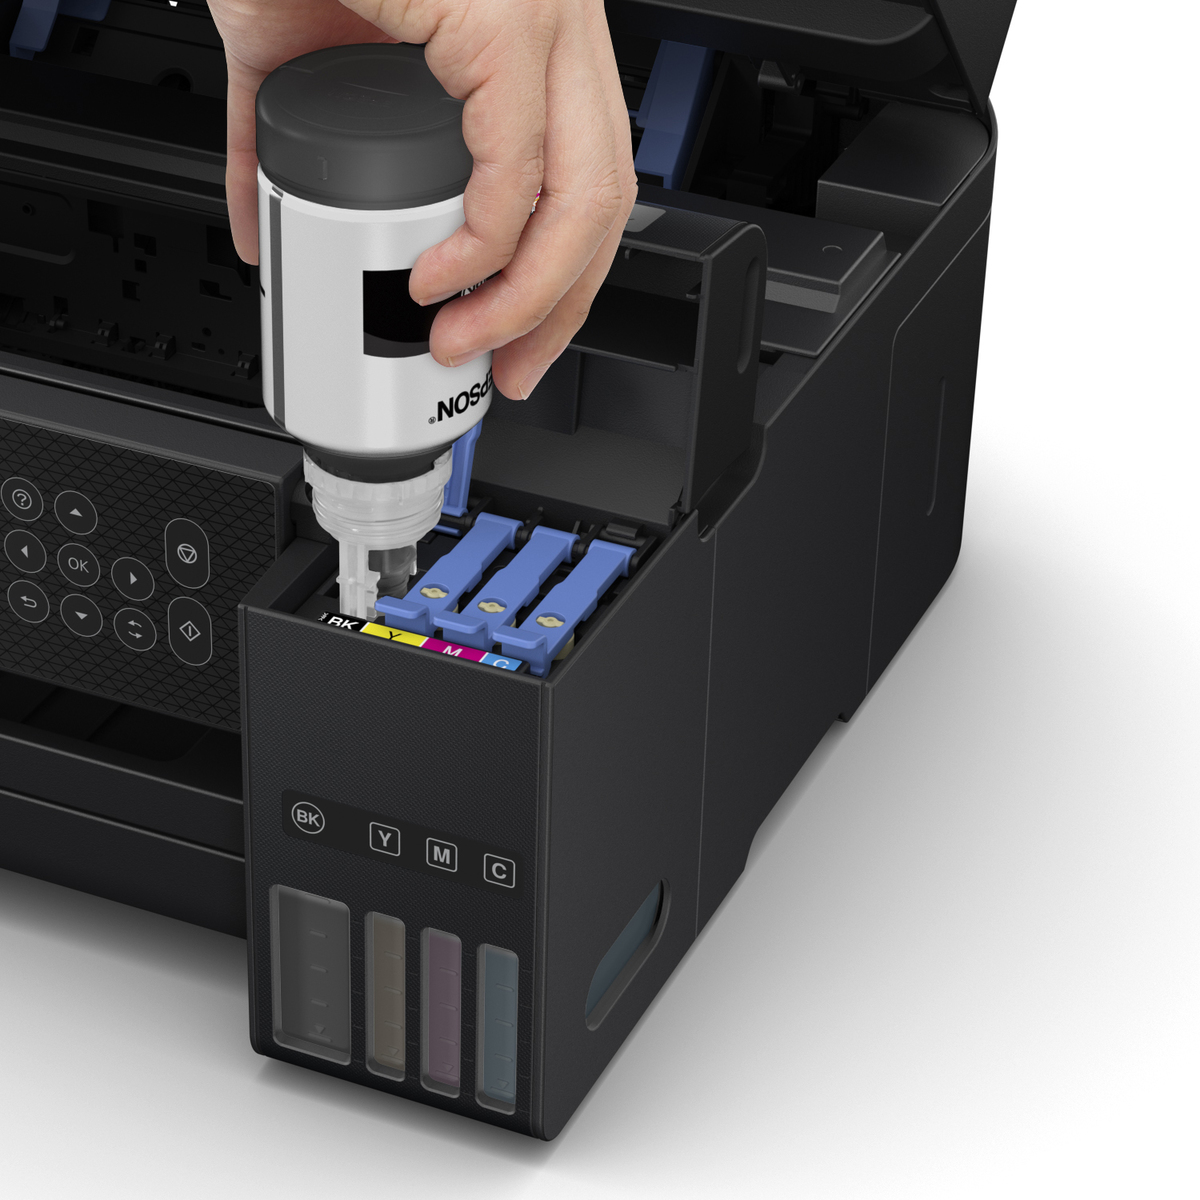 Impressora Multifuncional 3 em 1 Epson EcoTank<sup>®</sup> L4260